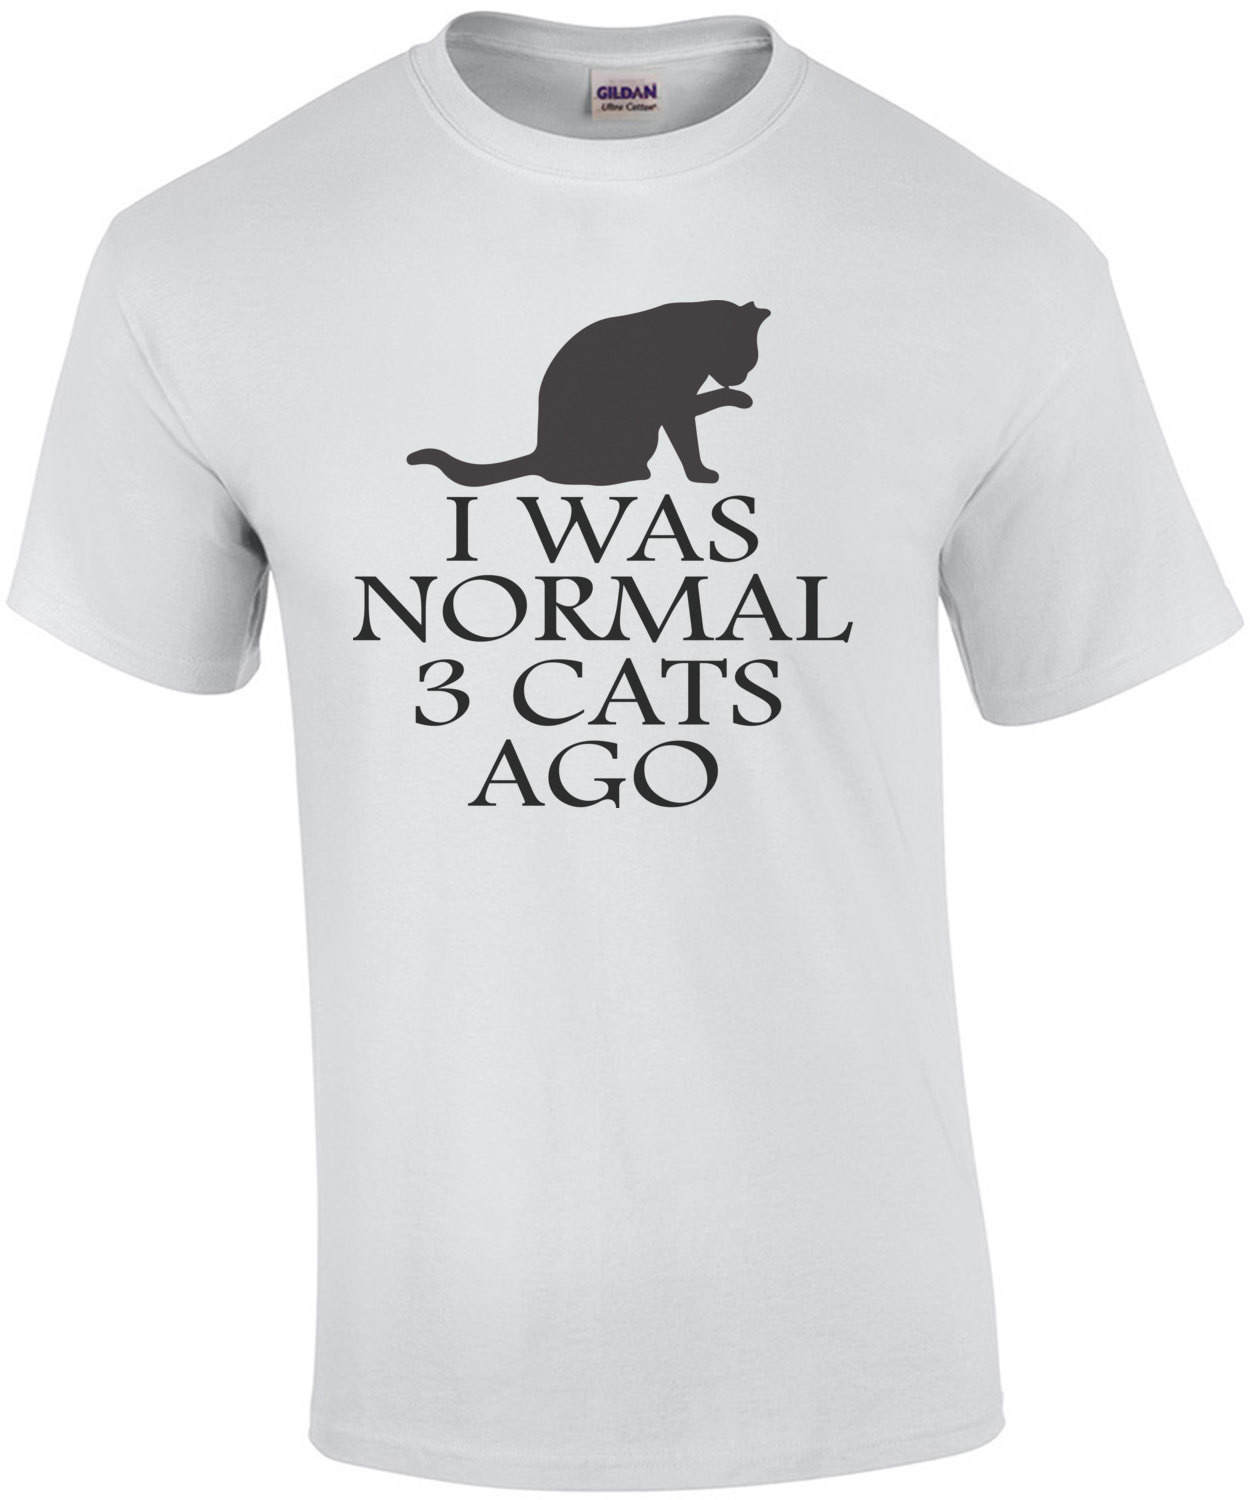 I was normal 3 cats ago - funny cat t-shirt